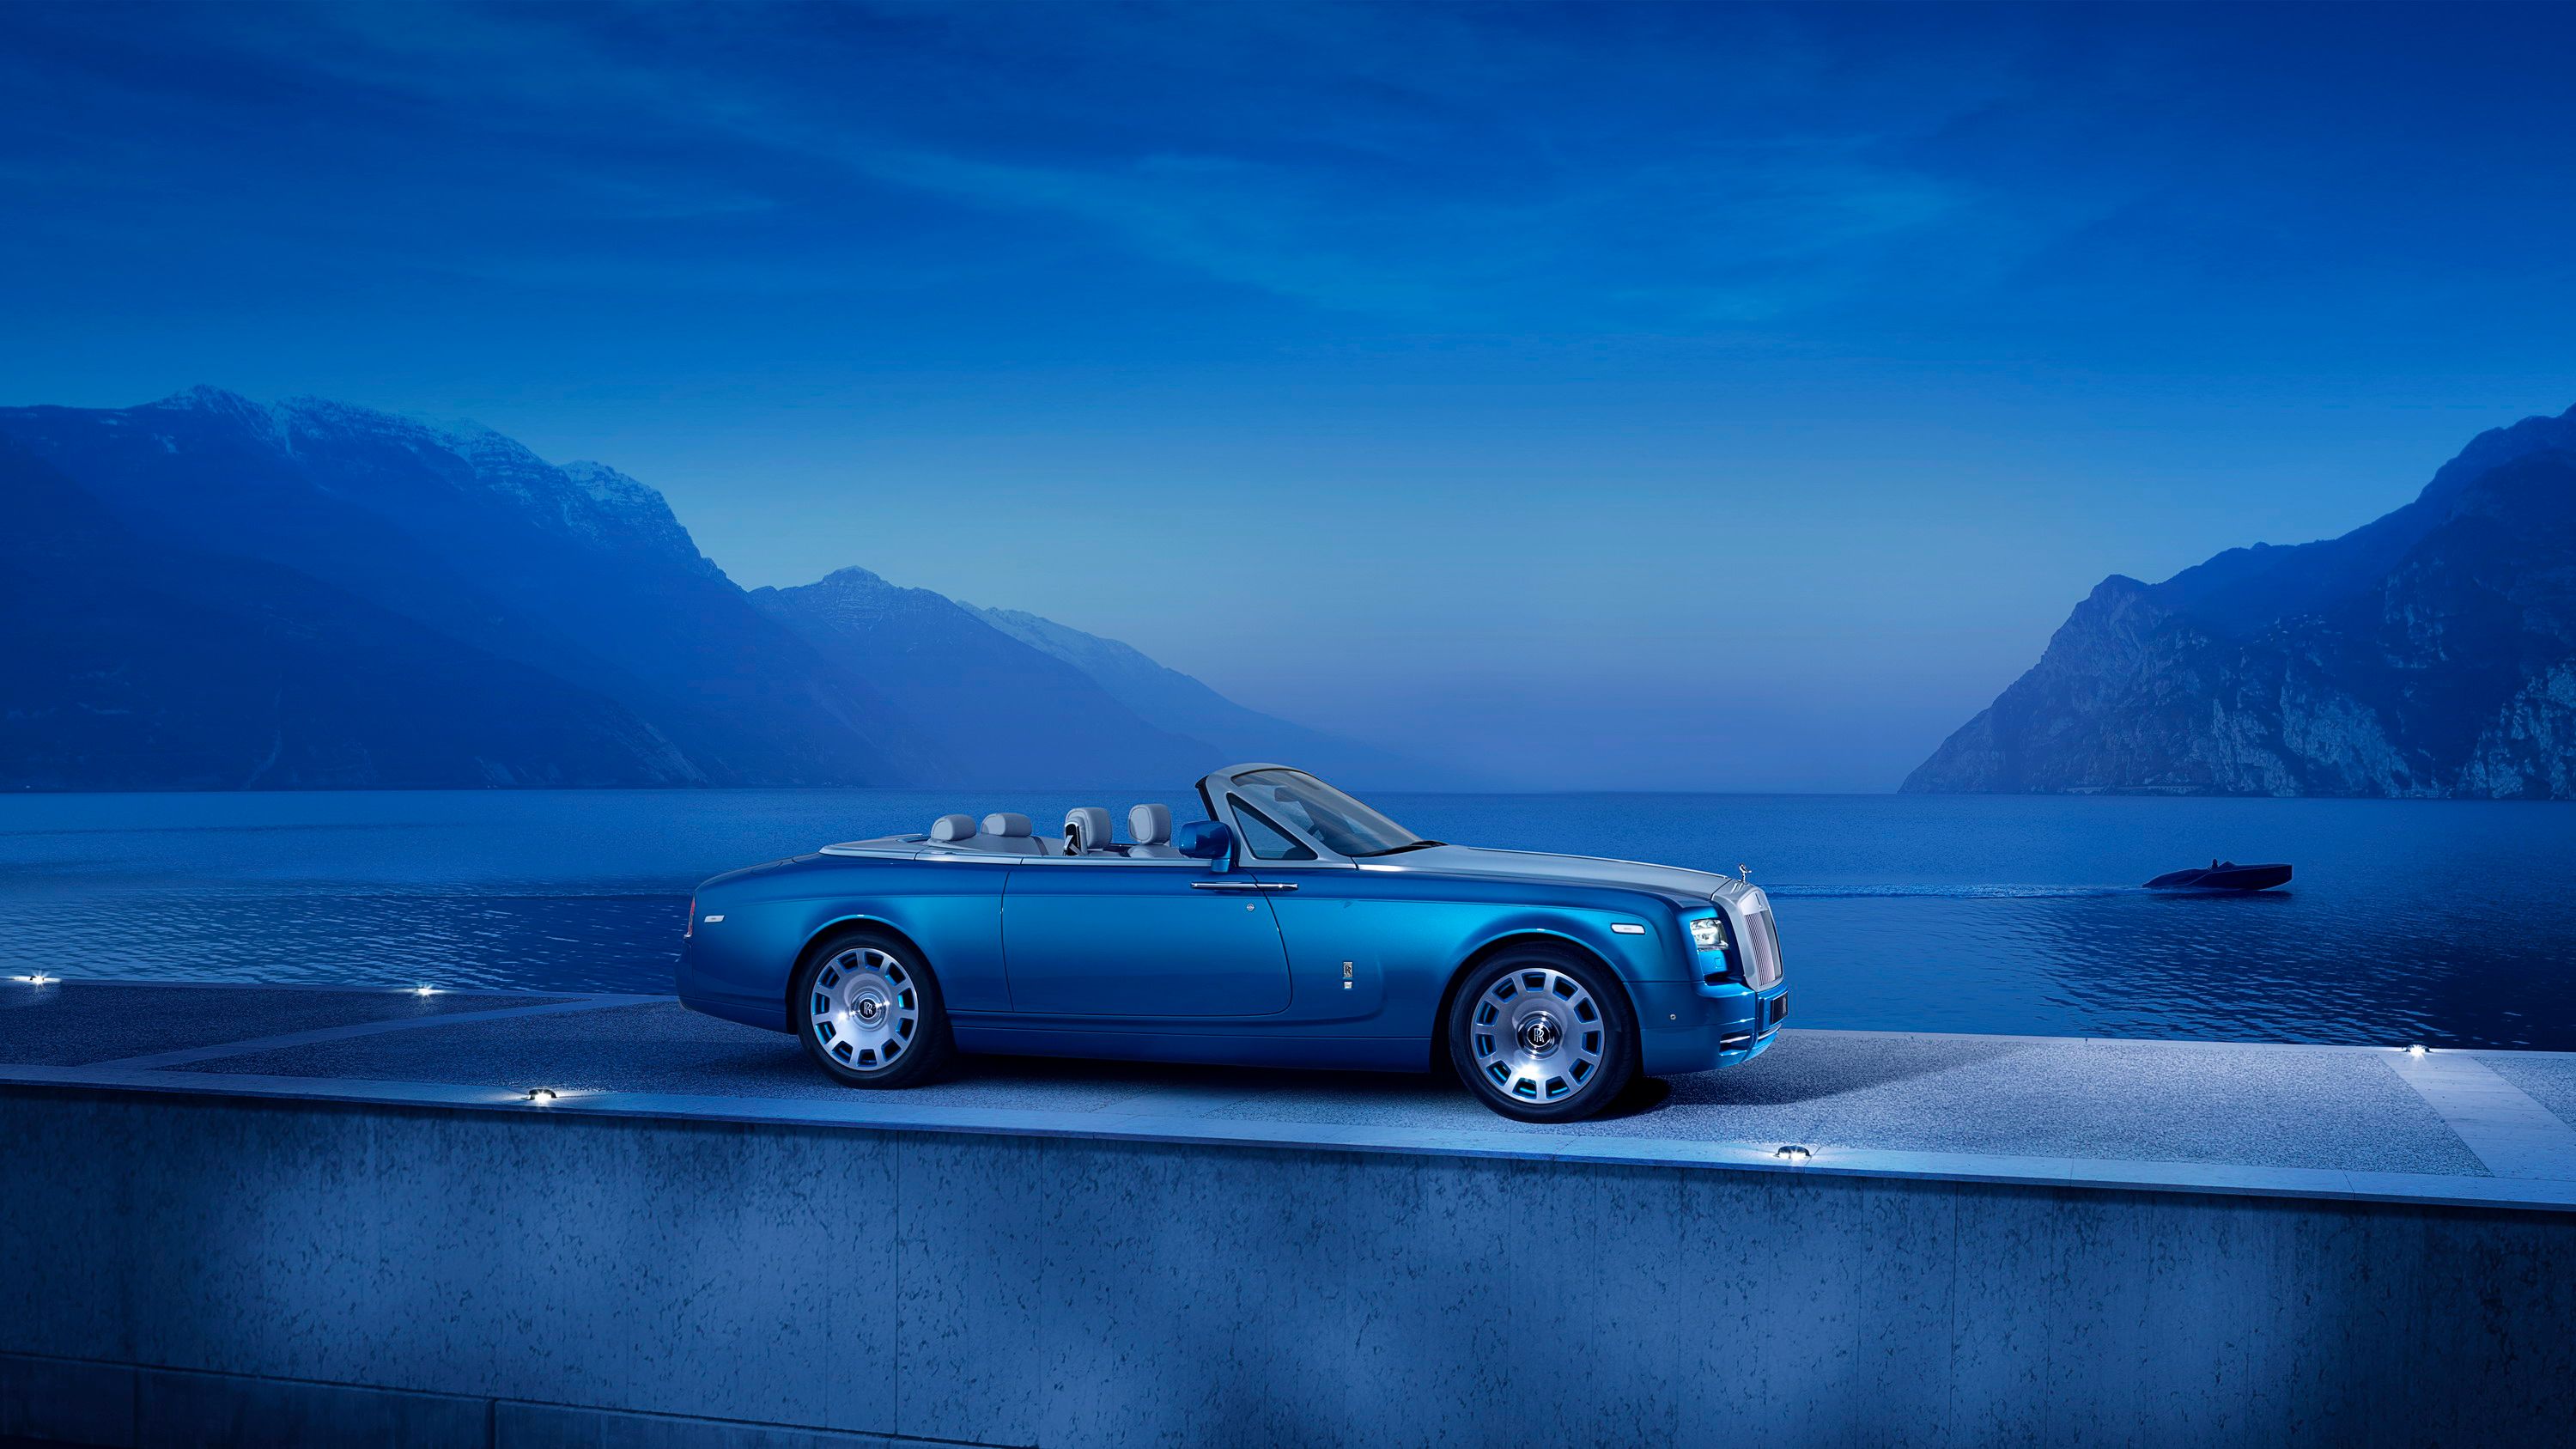 2014 Rolls-Royce Phantom Drophead Coupé Bespoke Waterspeed Collection